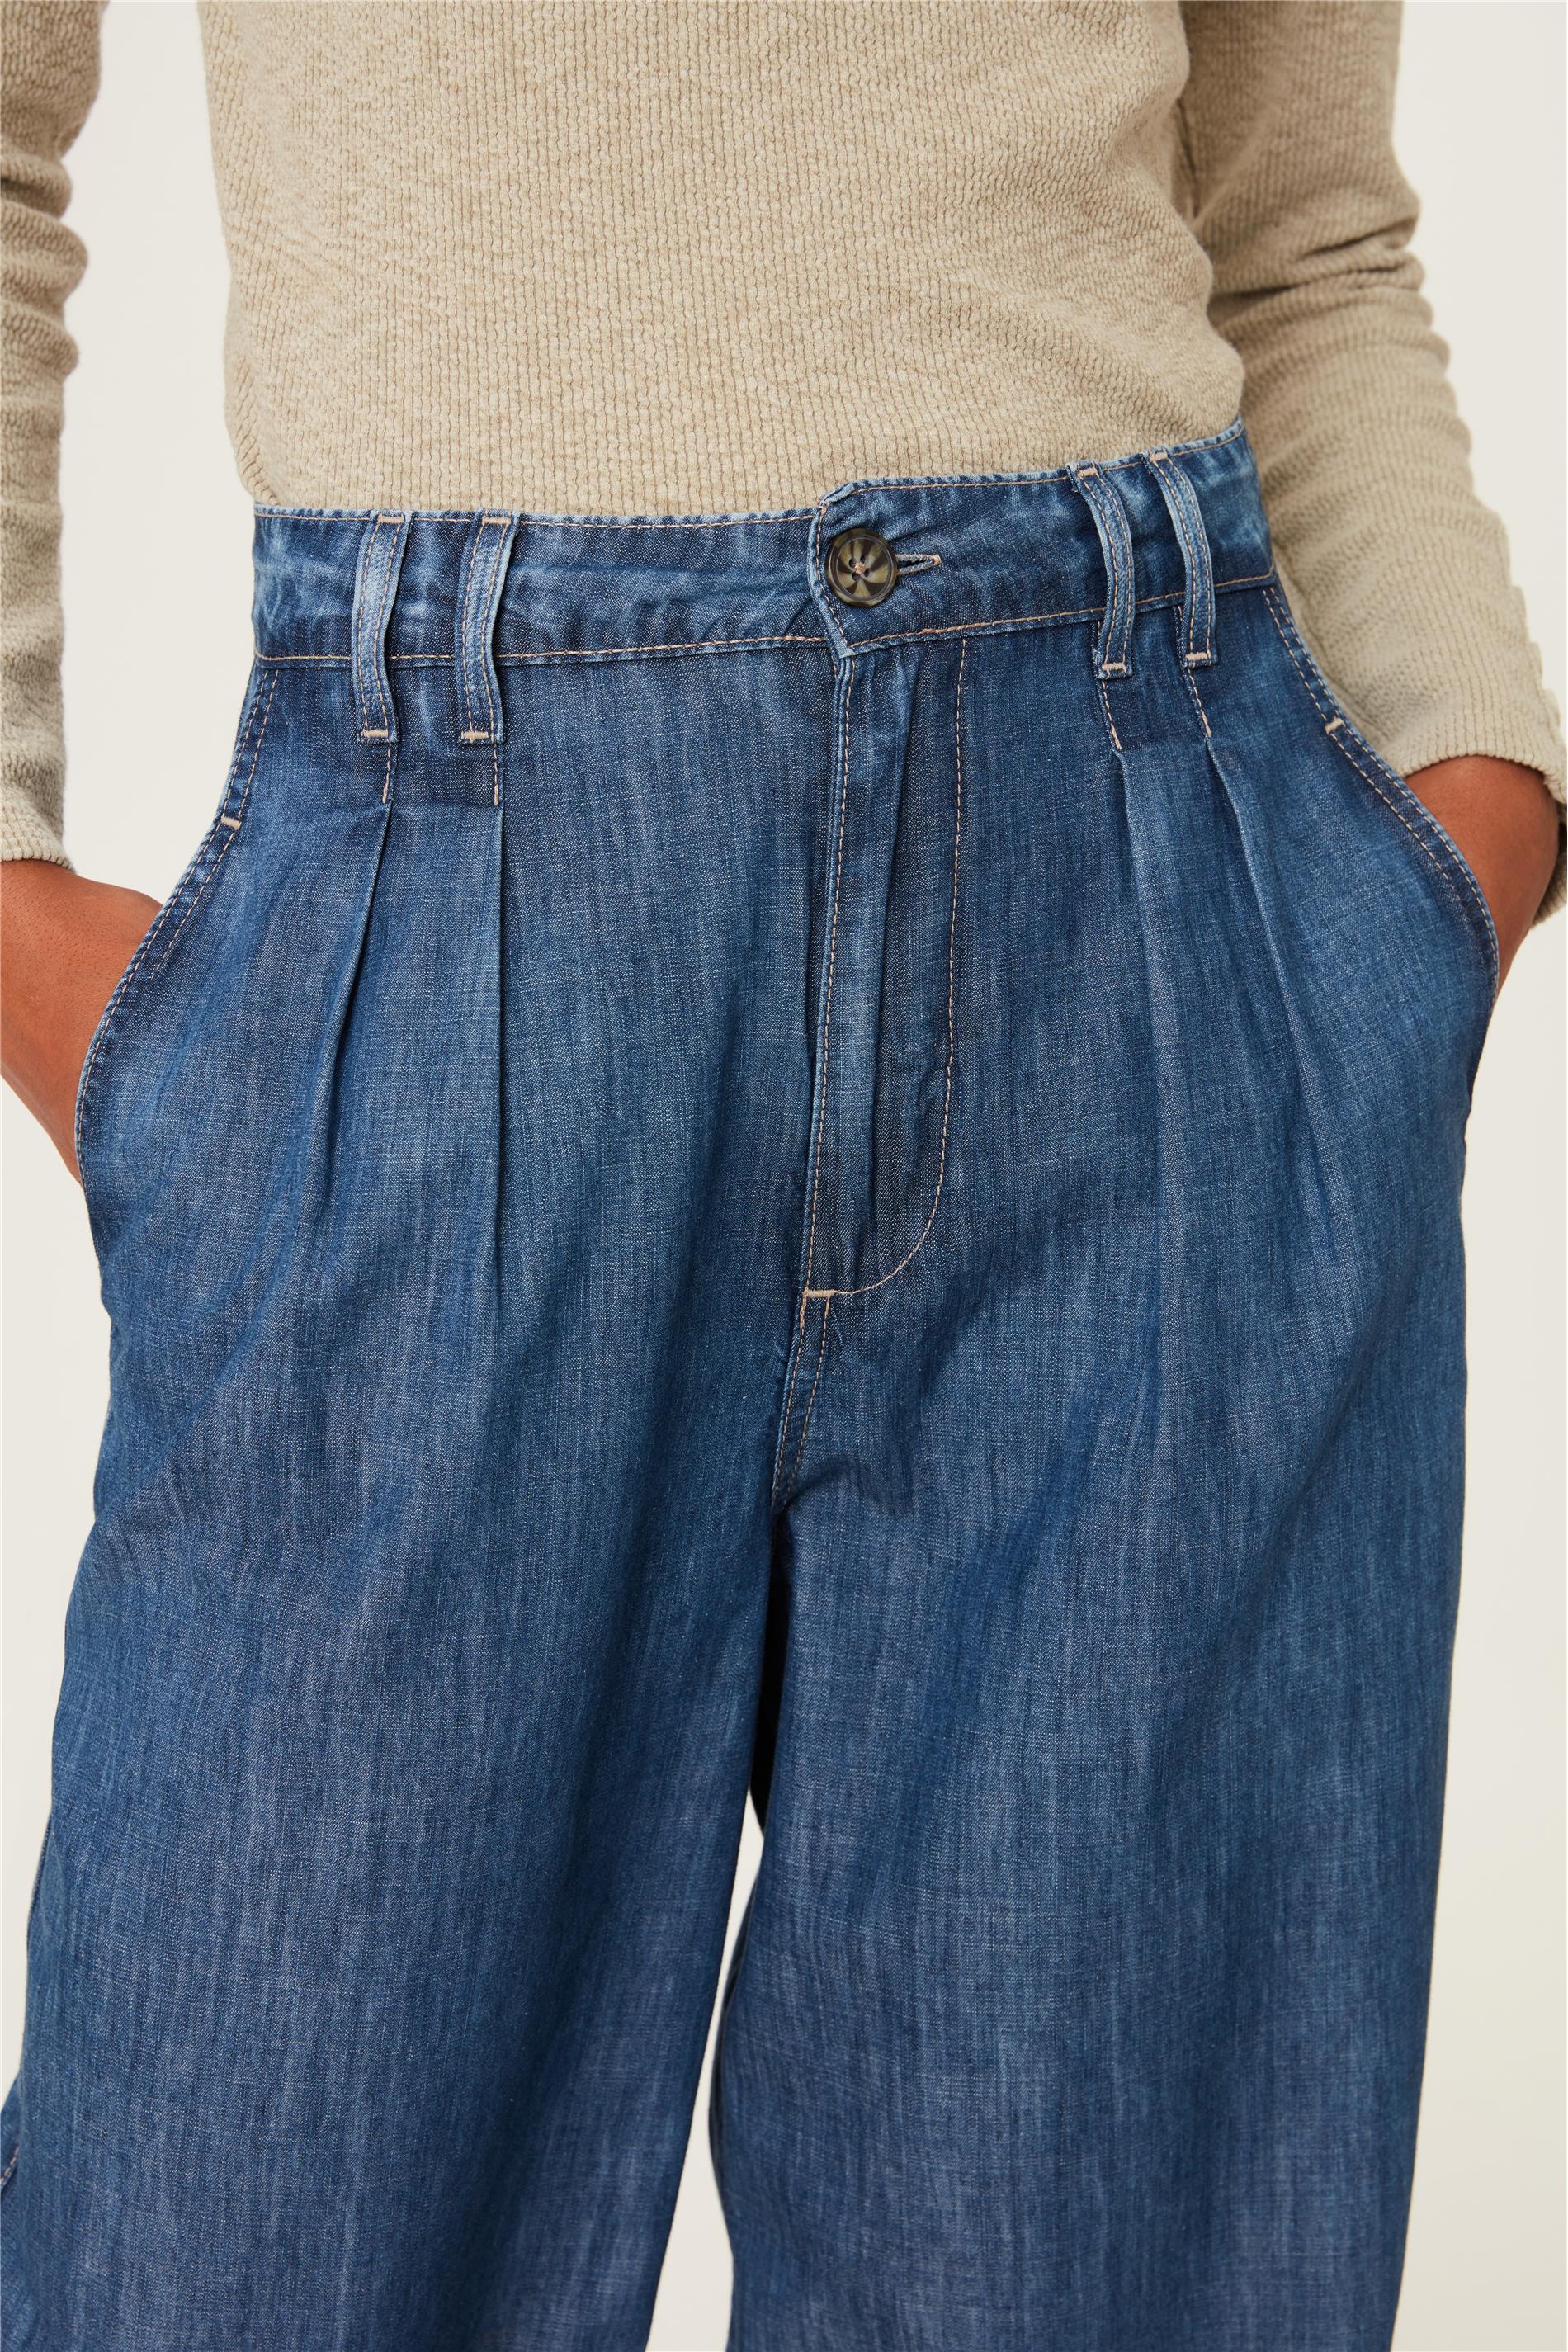 Calça Jeans Jegging Comfy G5 C1 - Damyller - O Jeans da Vida Real